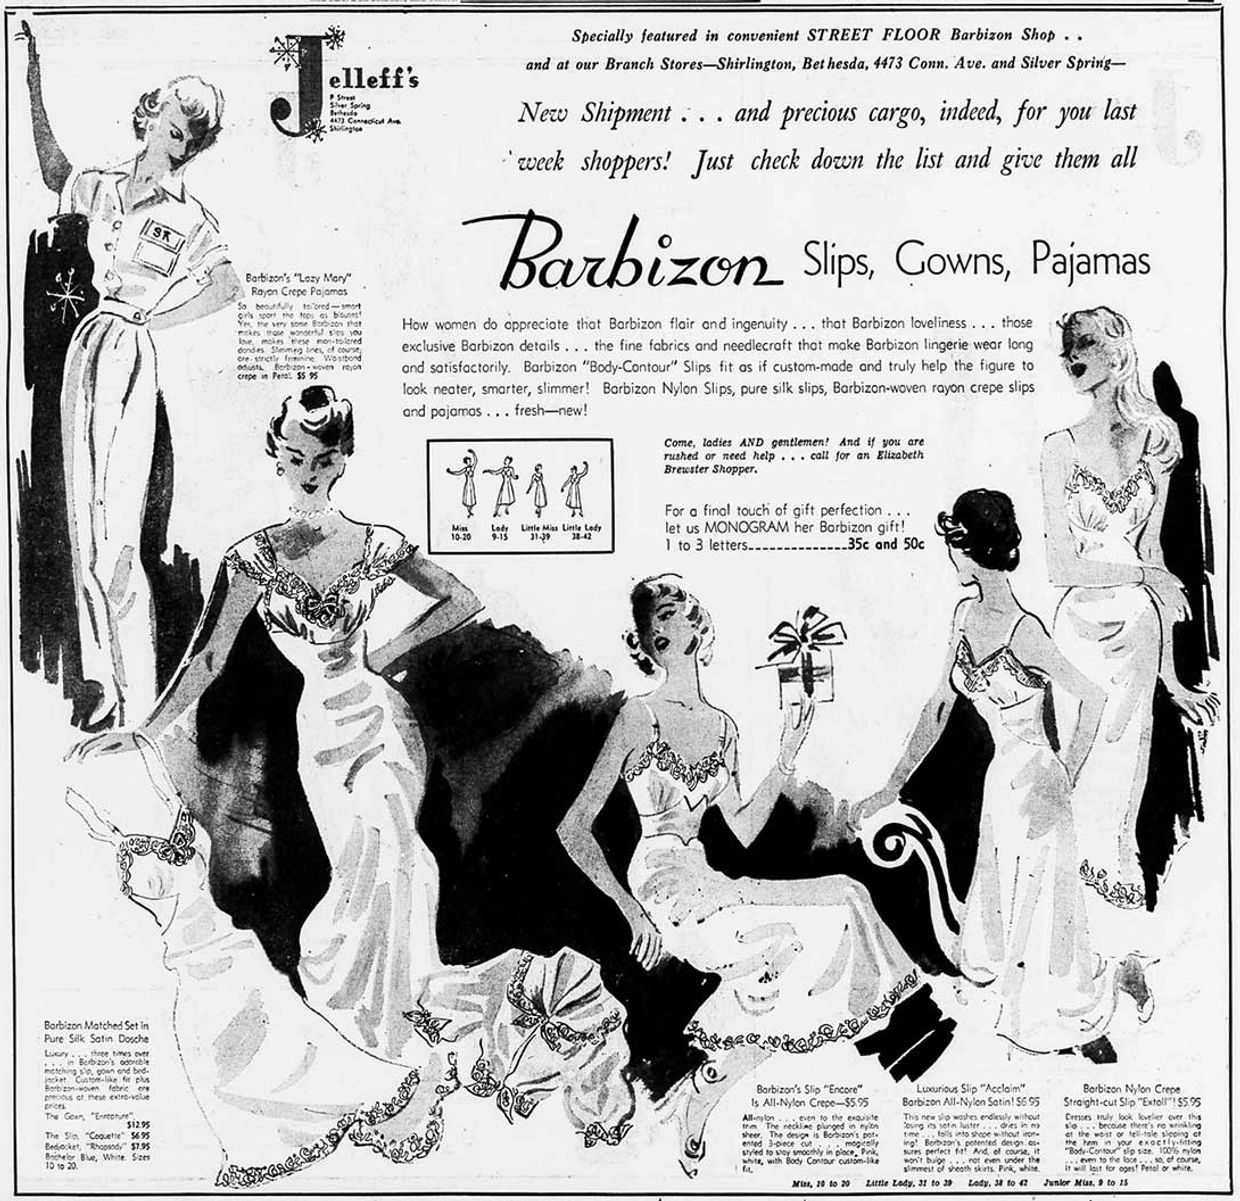 History of Barbizon slips